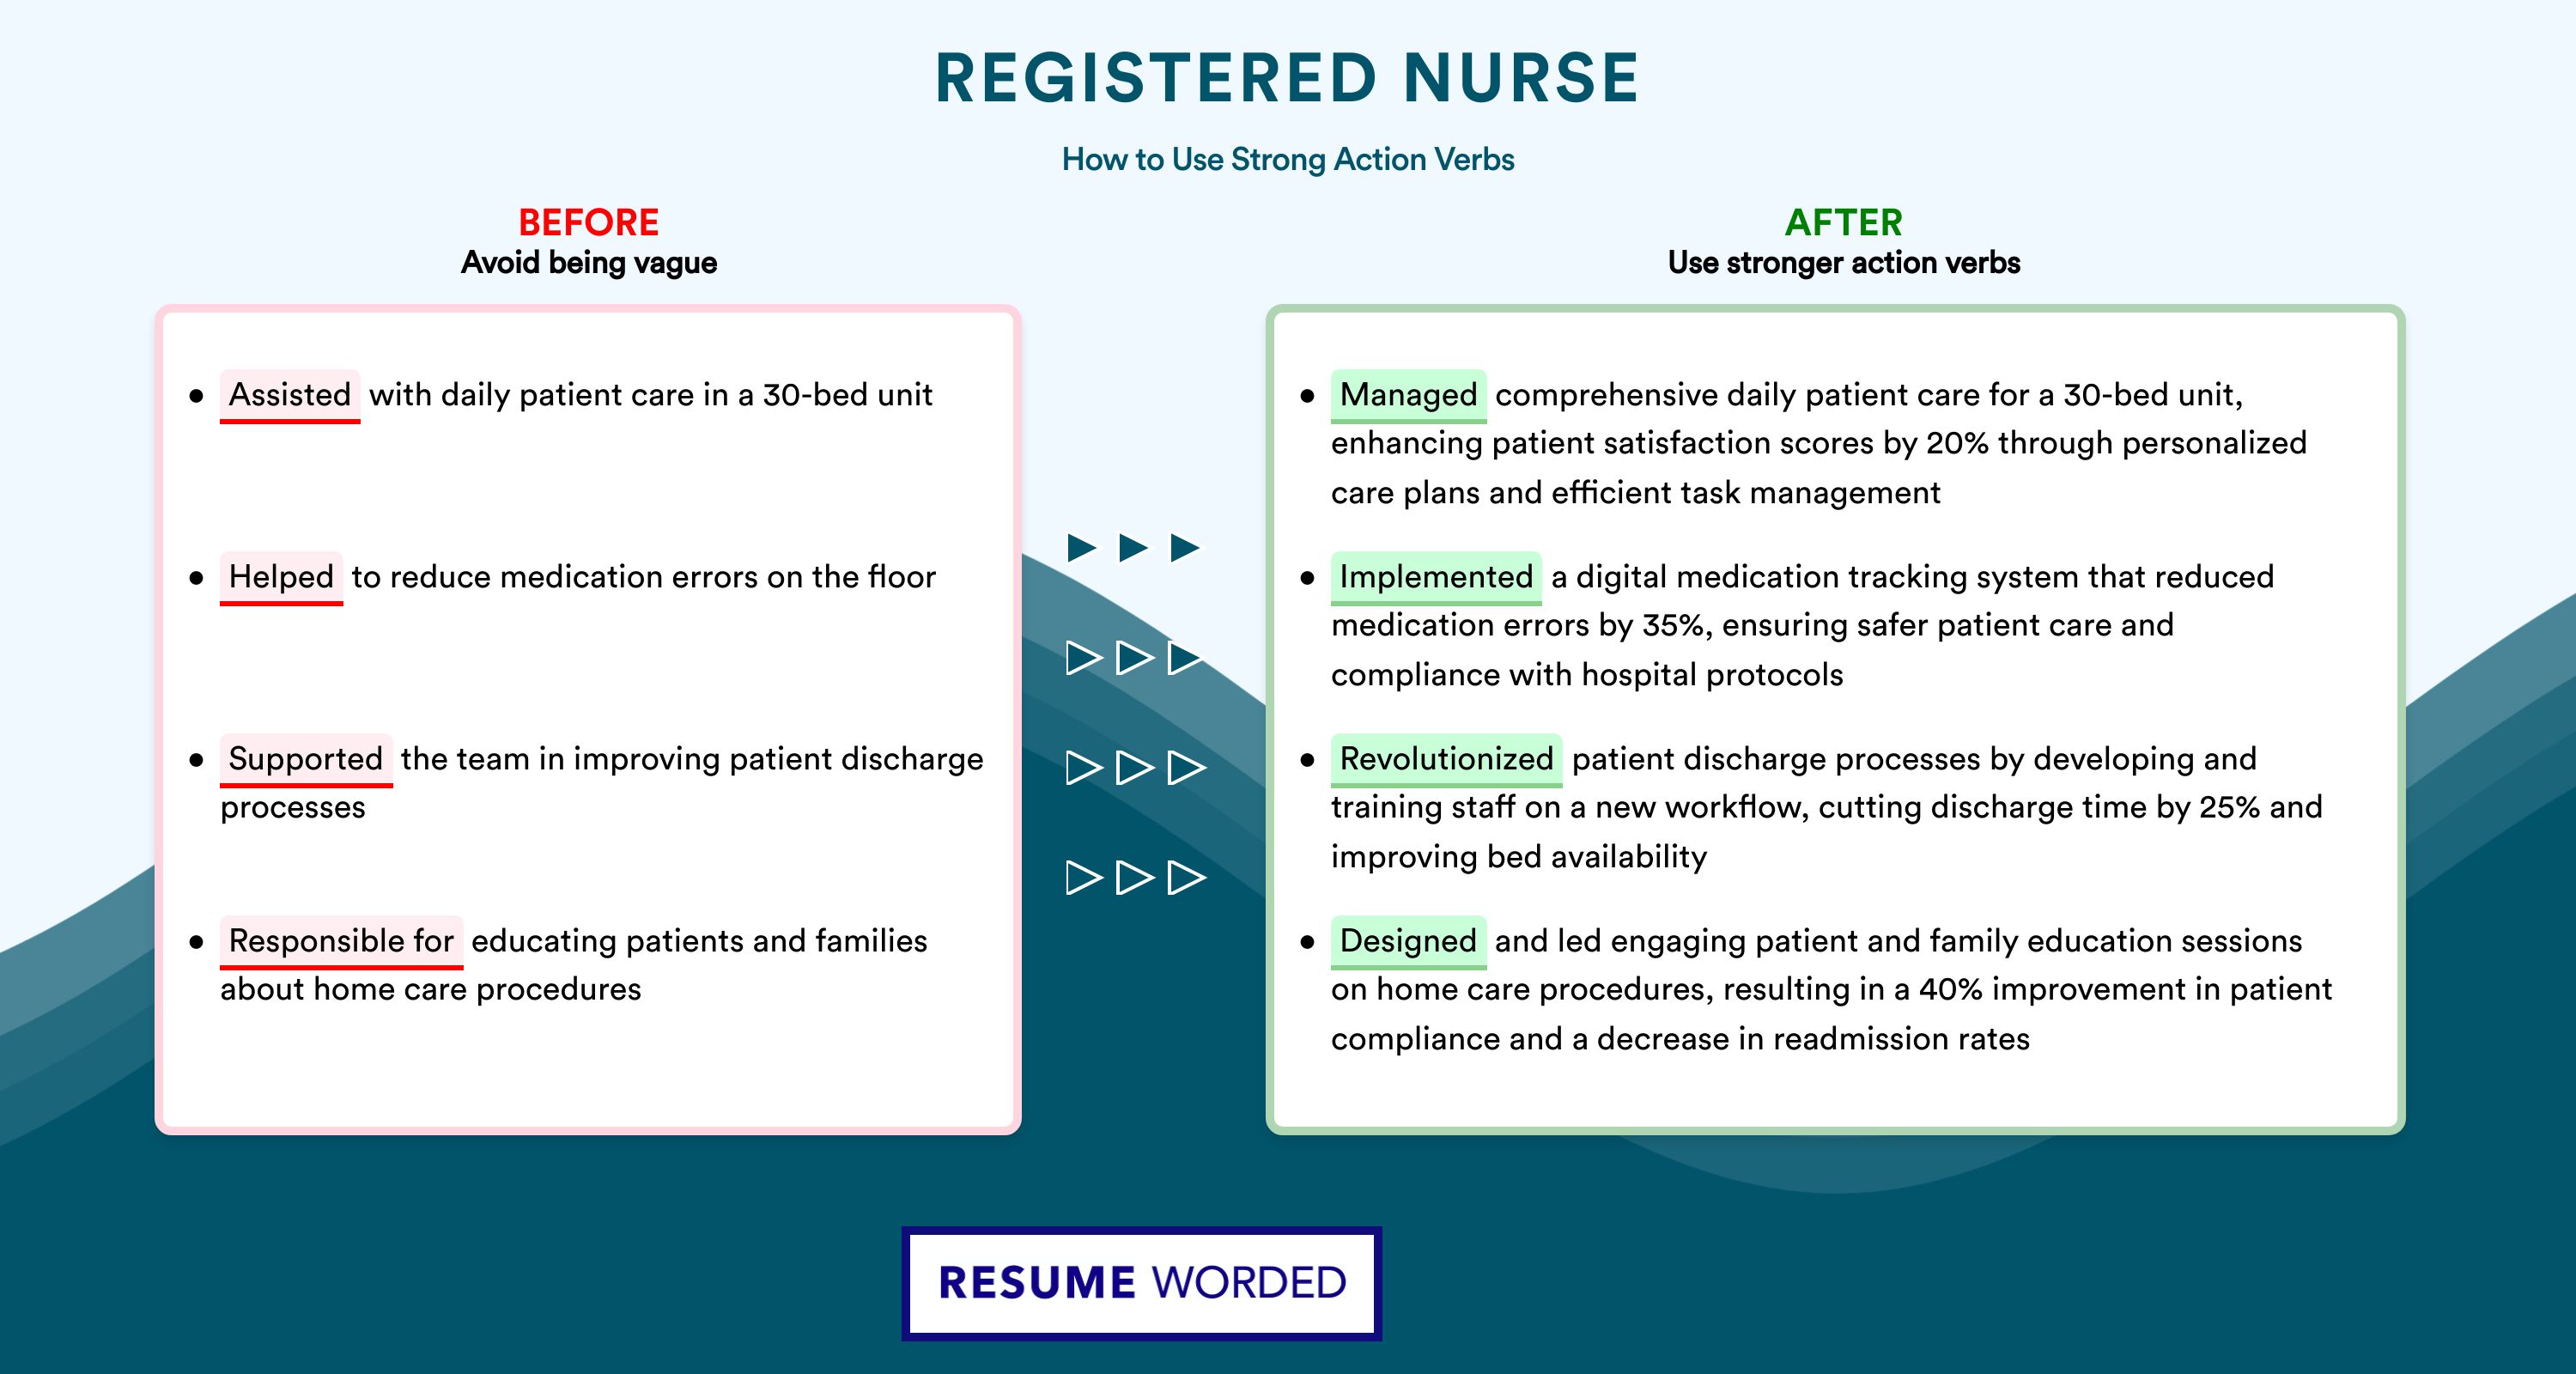 Action Verbs for Registered Nurse